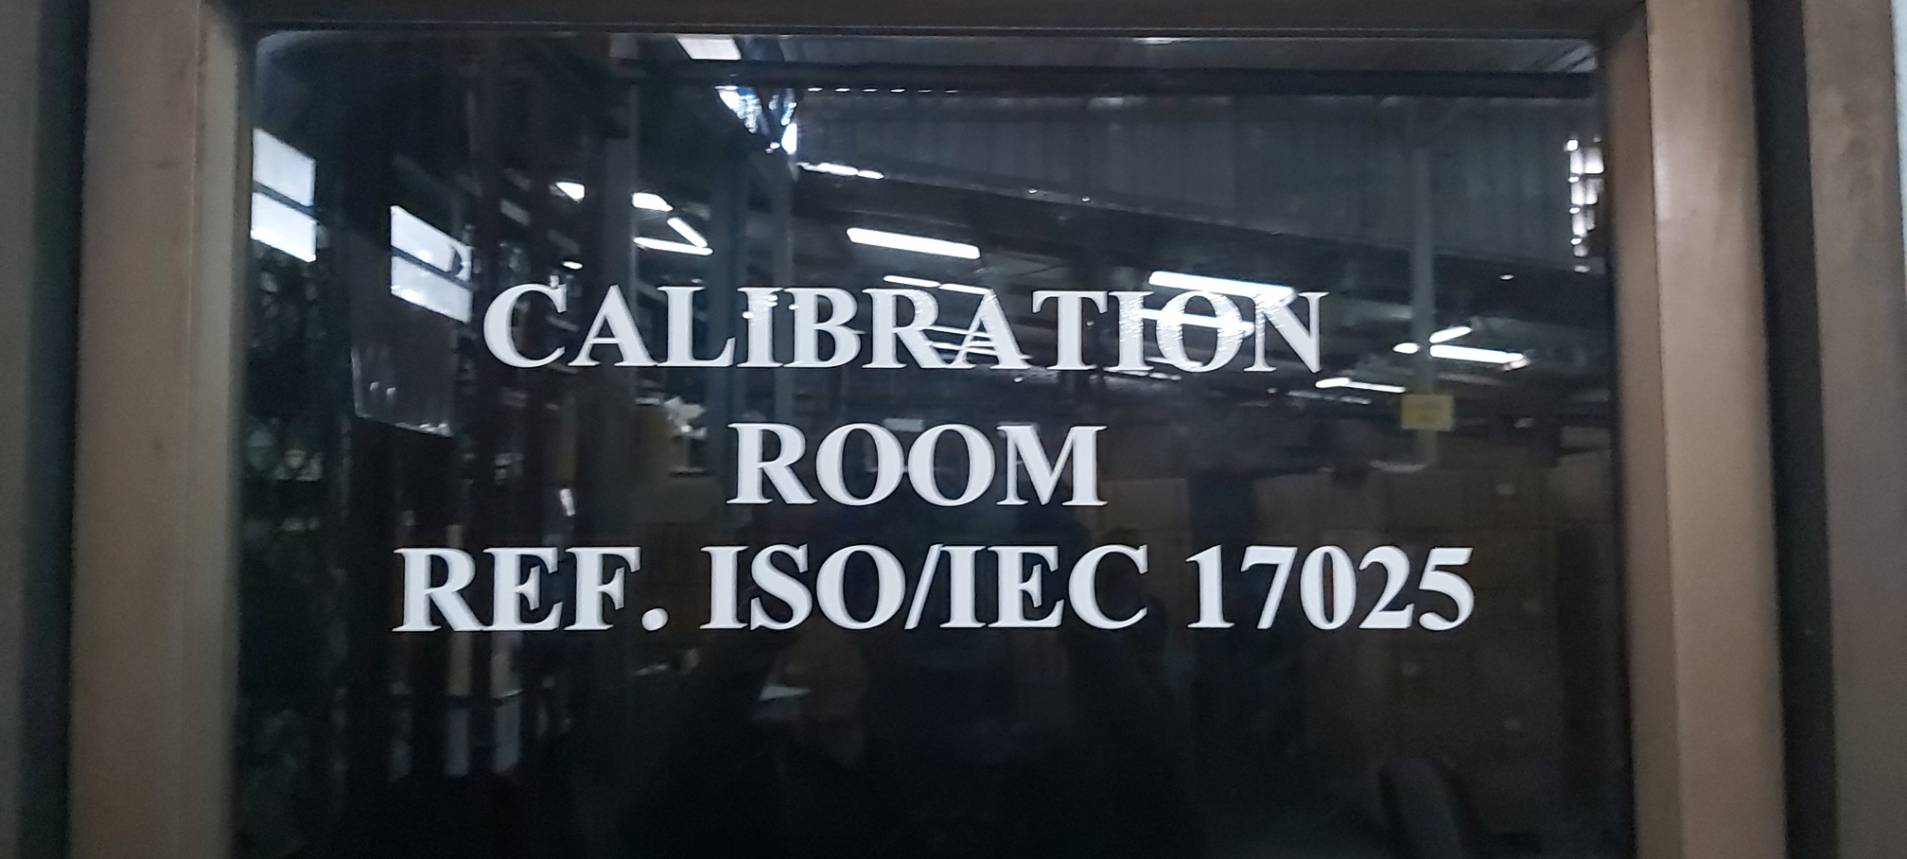 Internal instrument calibration laboratory ref.ISO / IEC 17025